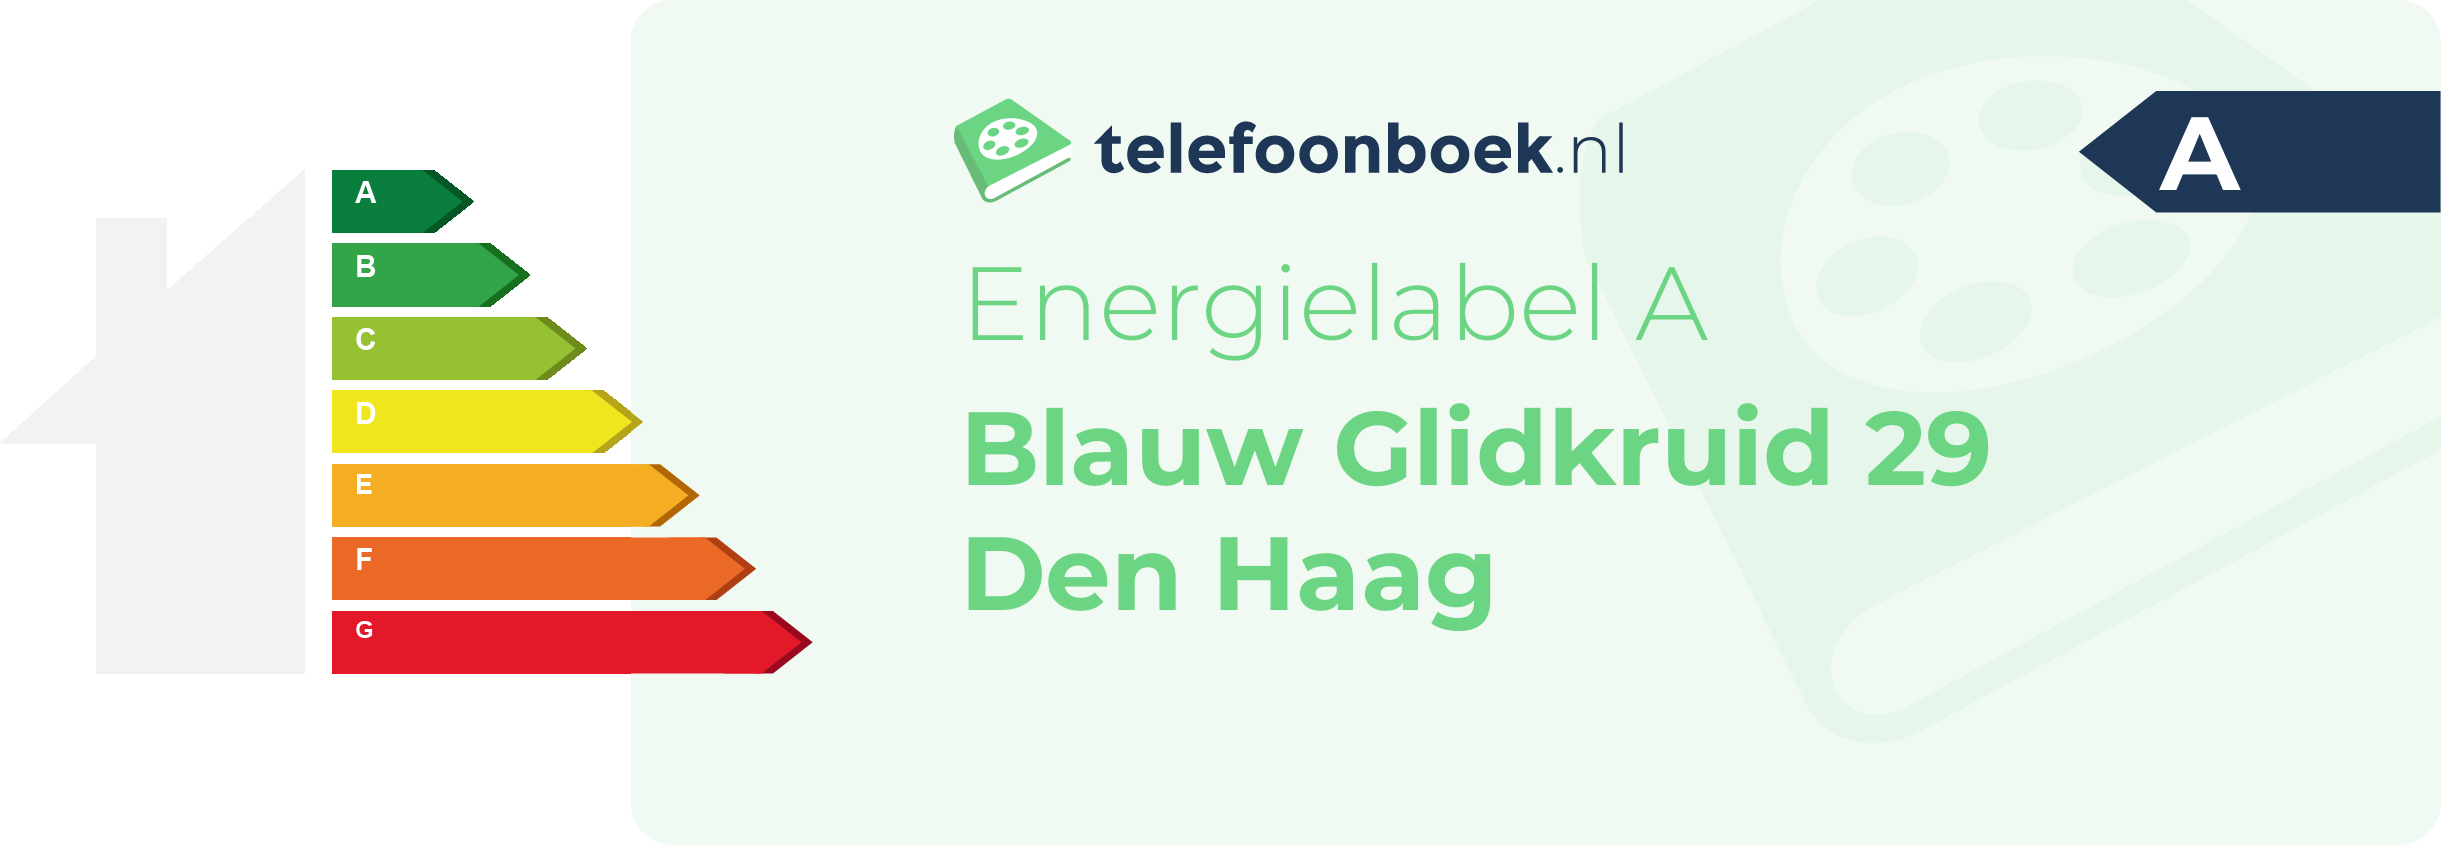 Energielabel Blauw Glidkruid 29 Den Haag